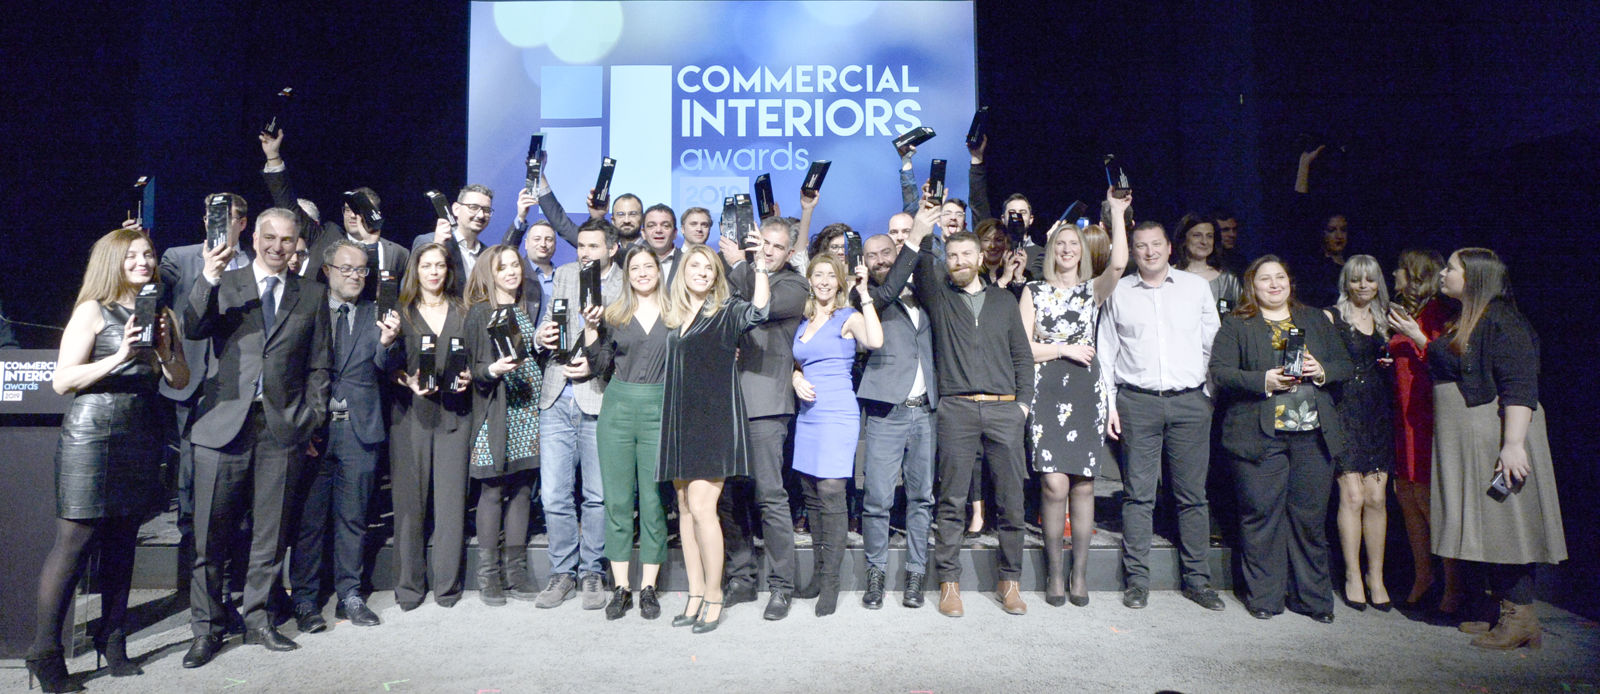 Archisearch Commercial Interiors Awards 2019: Βραβεύθηκαν οι πρωτοποριακοί επιχειρηματικοί χώροι!